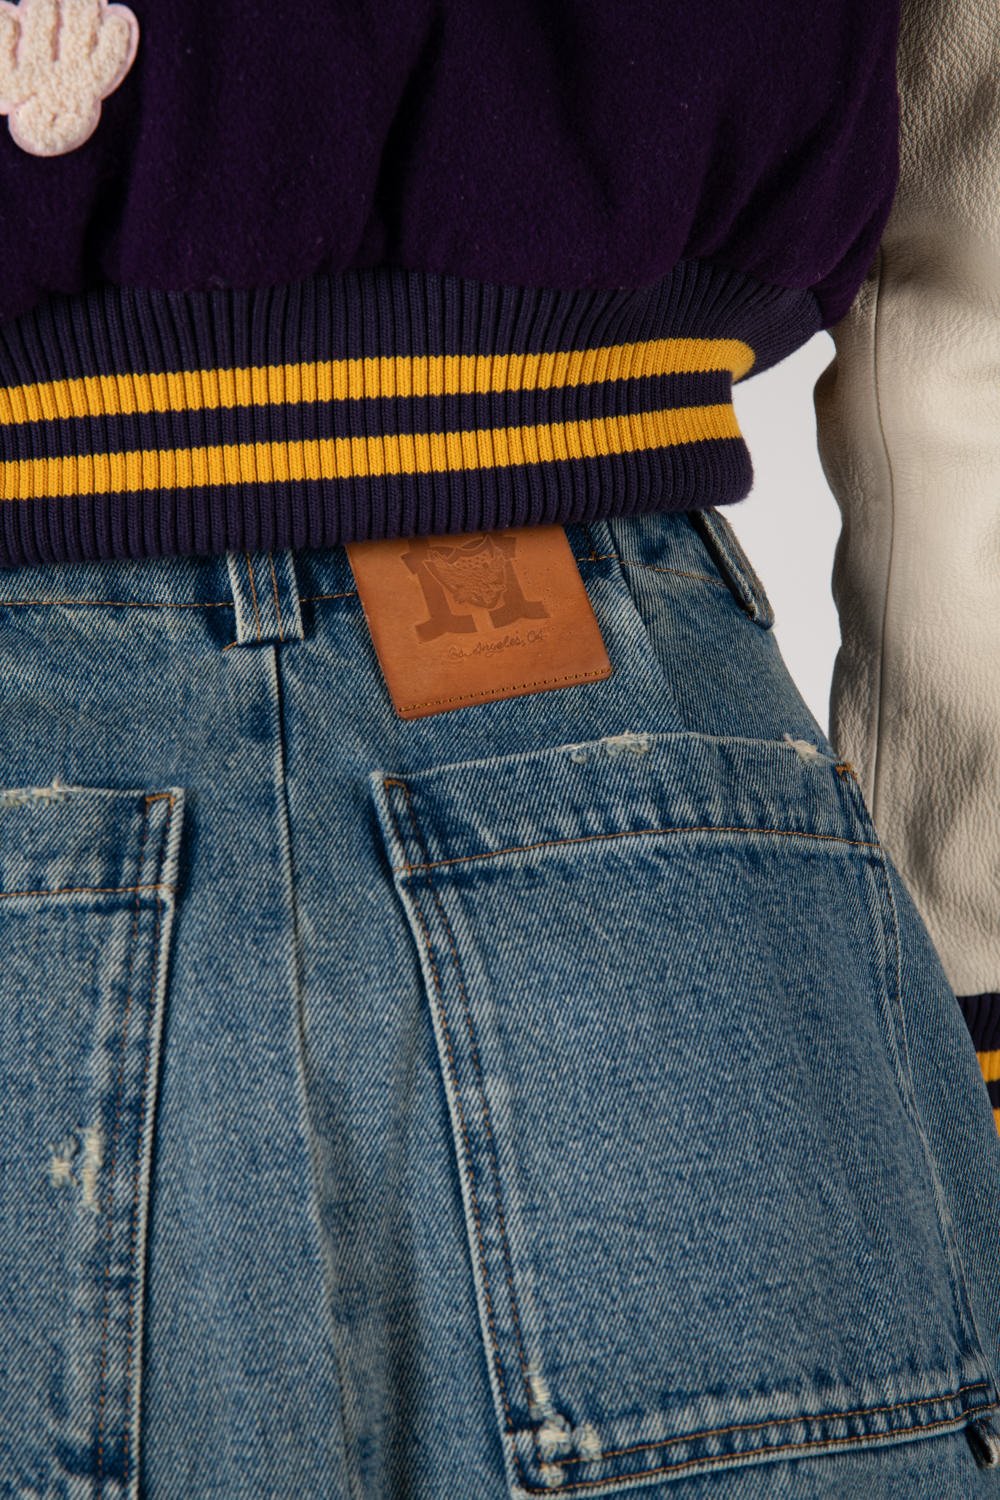 SK(8)RT Denim skirt. Front & back pockets. 100% cotton HTC LOS ANGELES